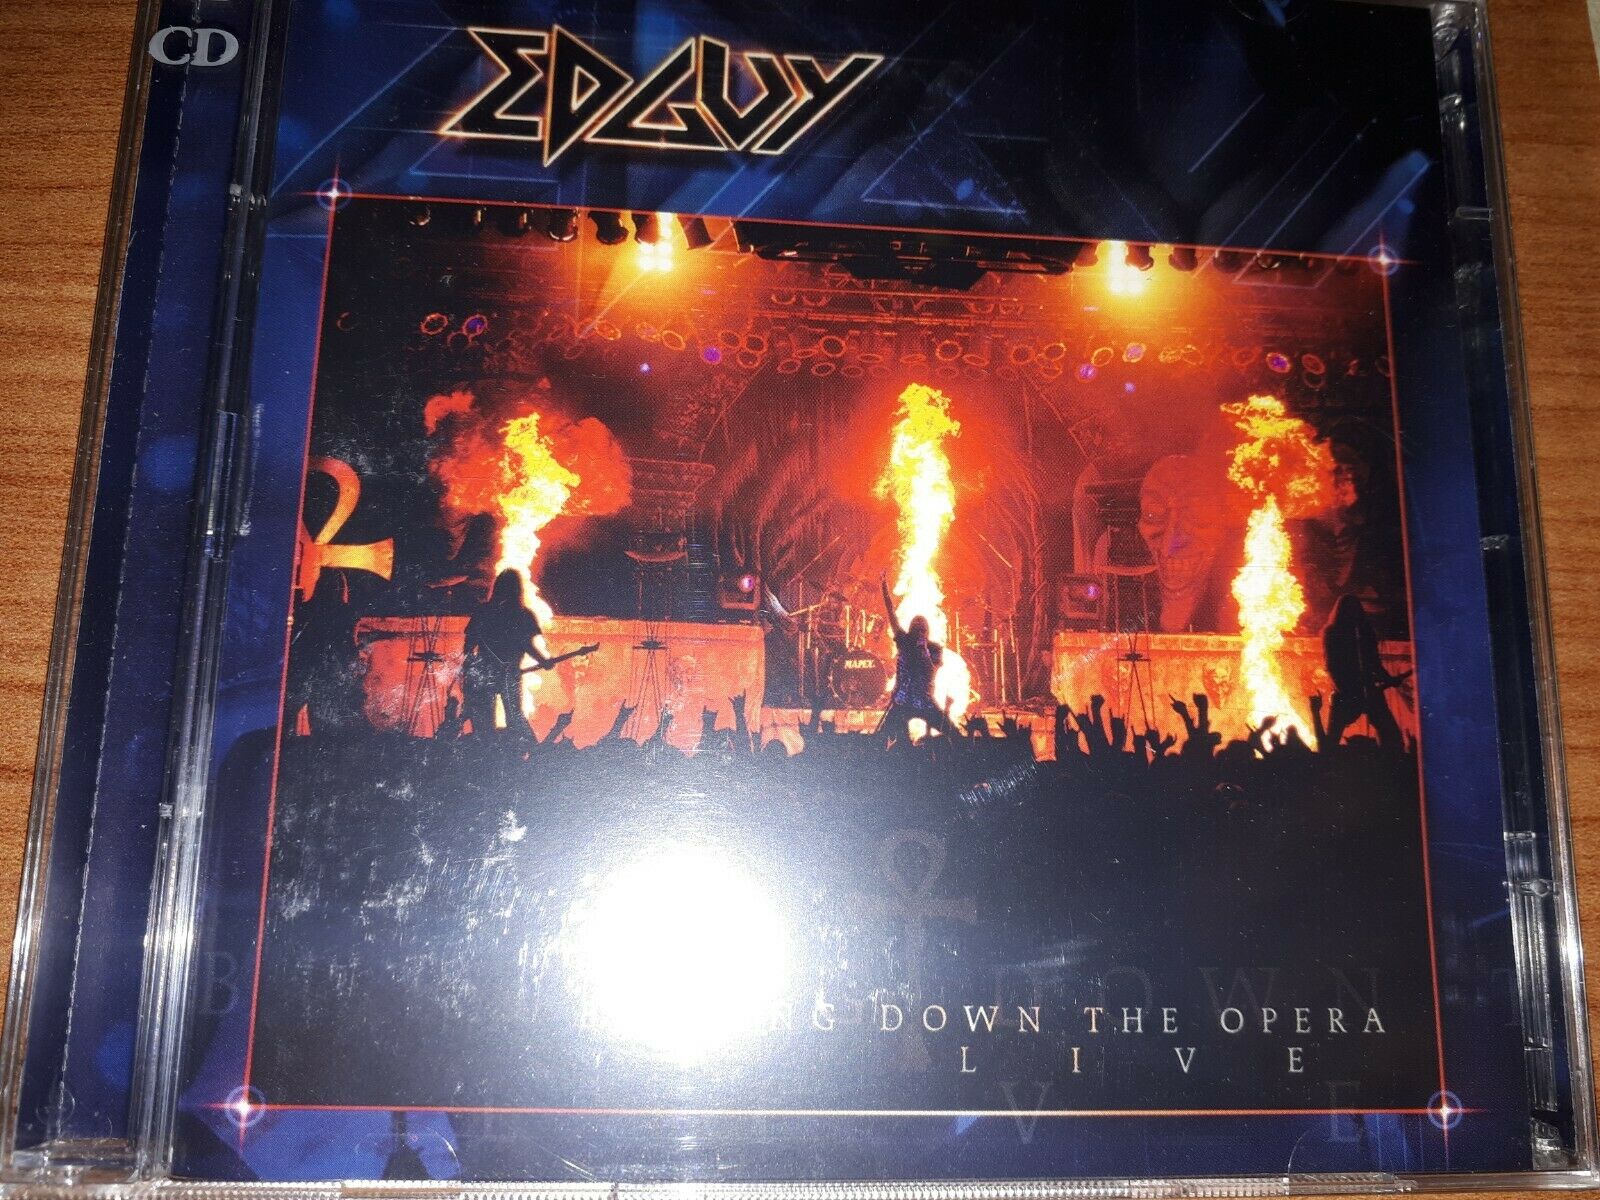 Edguy - Burning down the opera live (2cd)